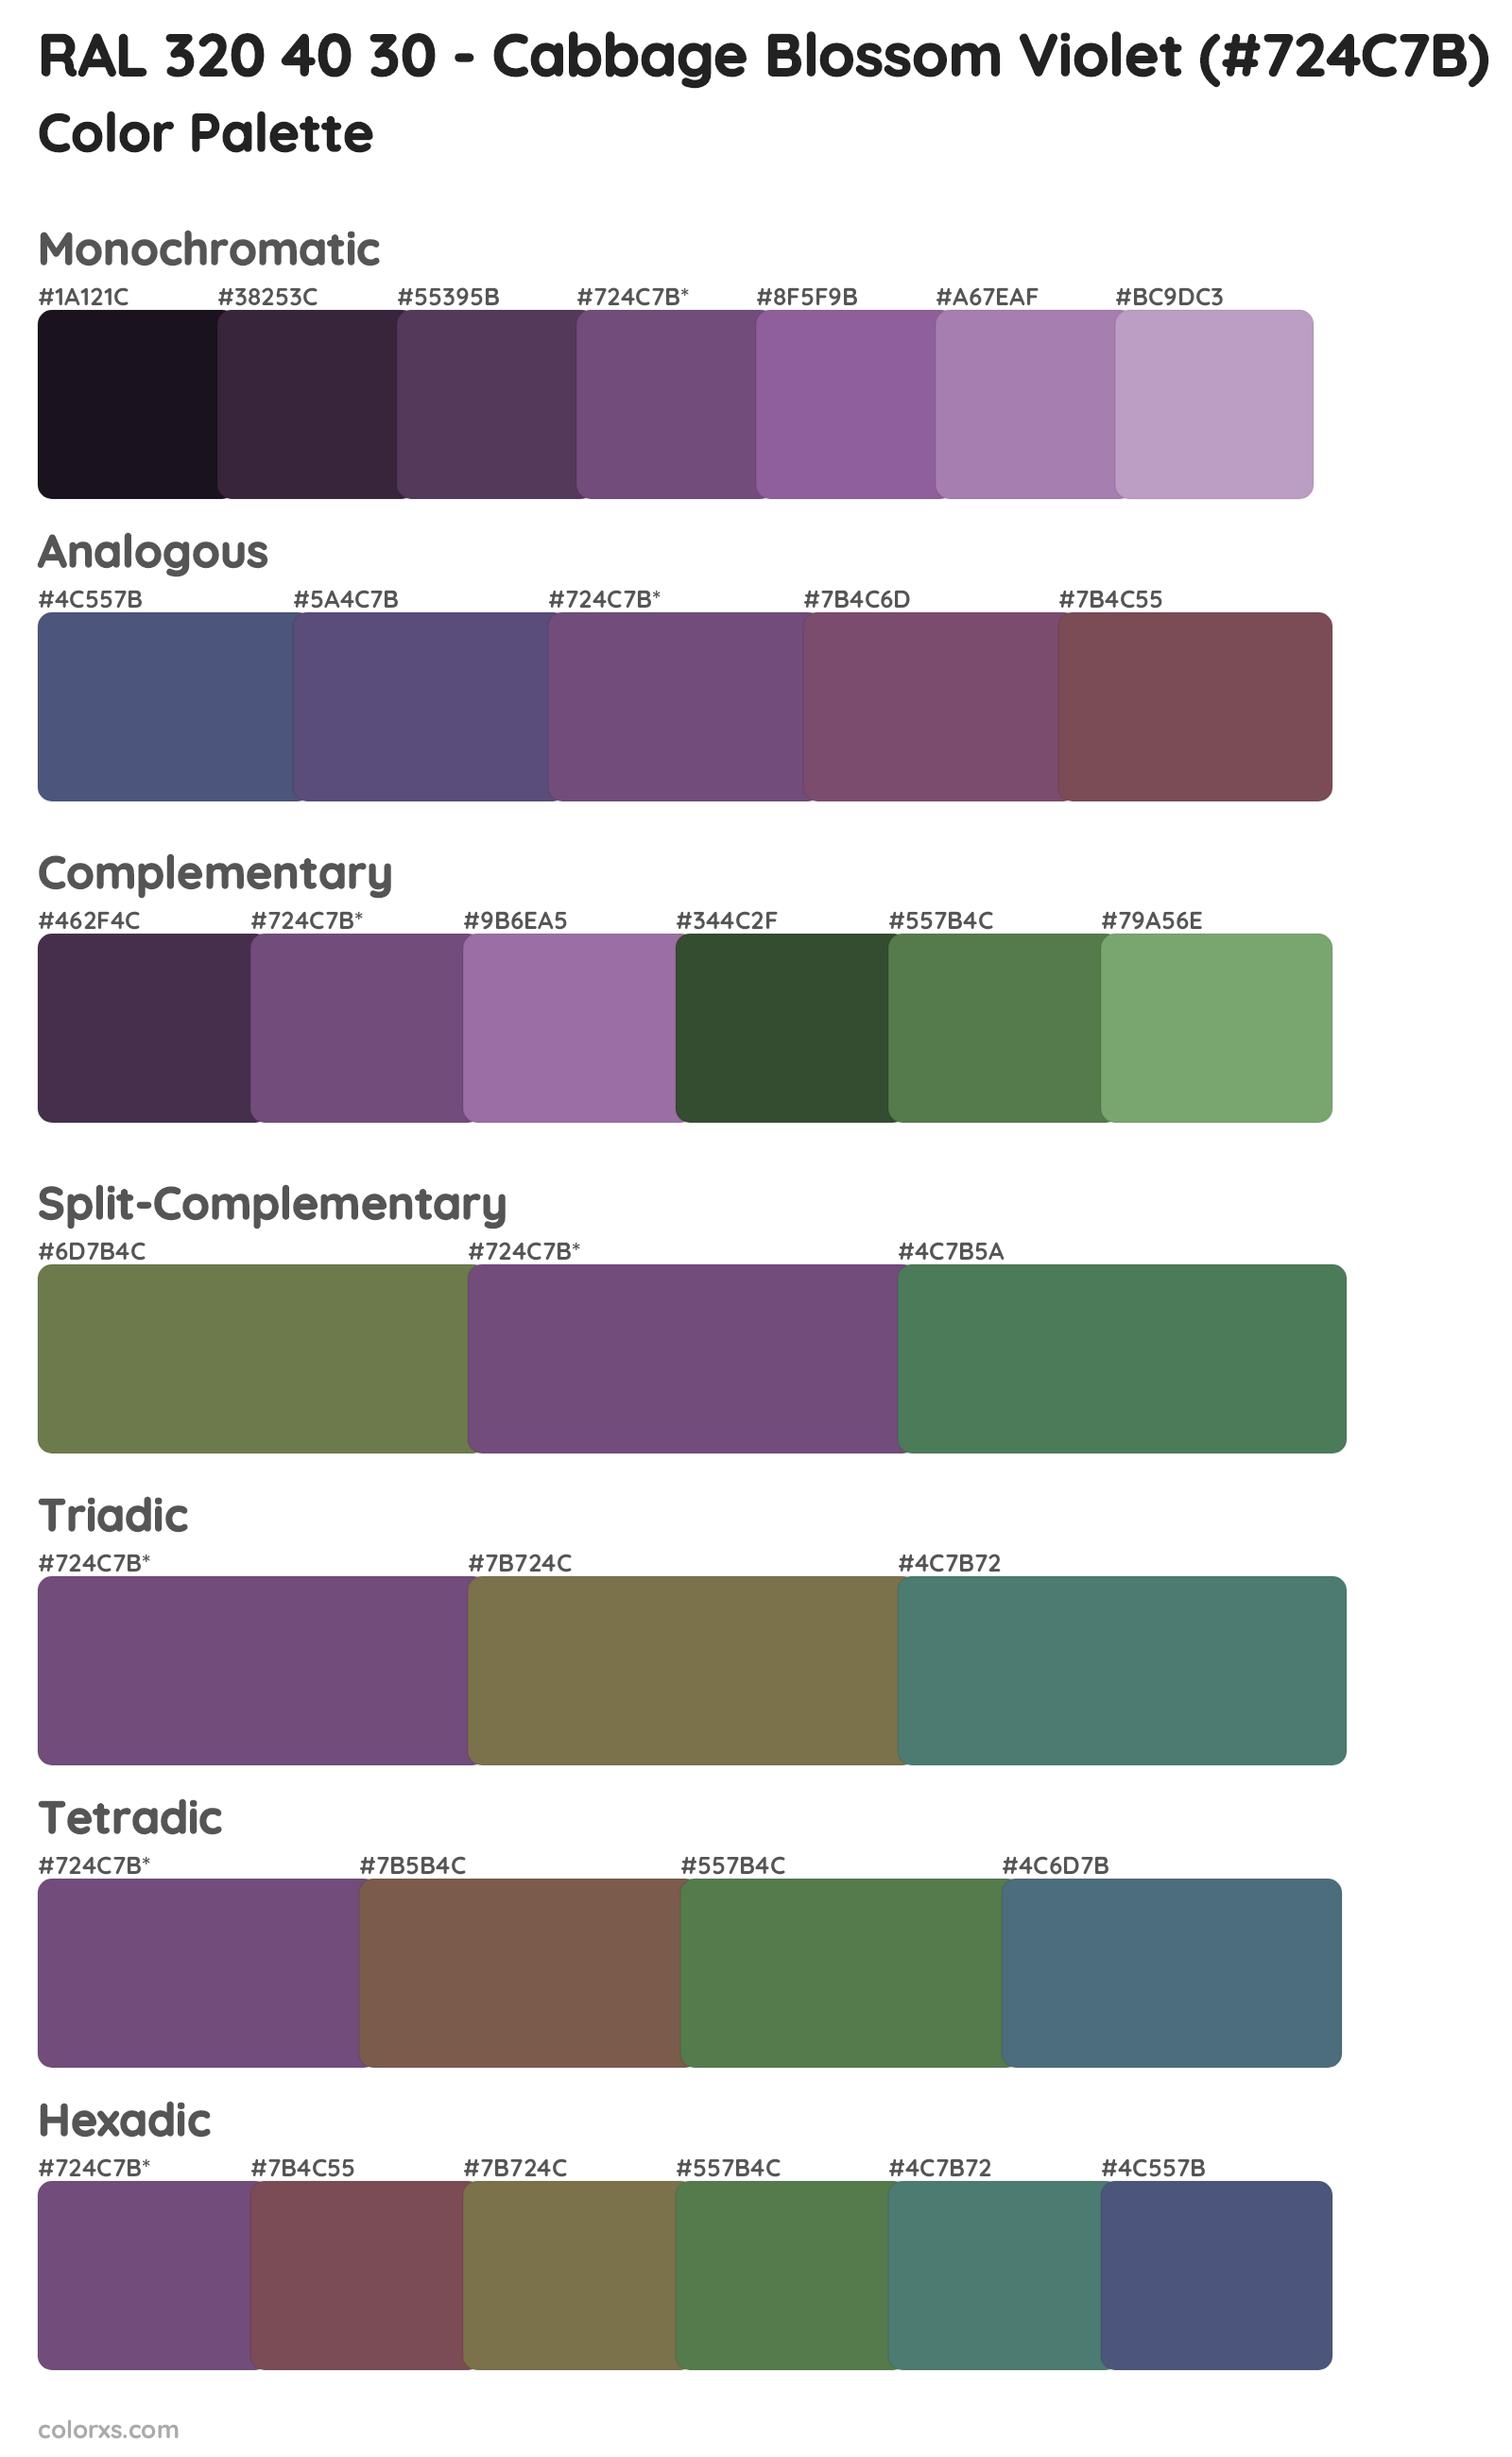 RAL 320 40 30 - Cabbage Blossom Violet Color Scheme Palettes